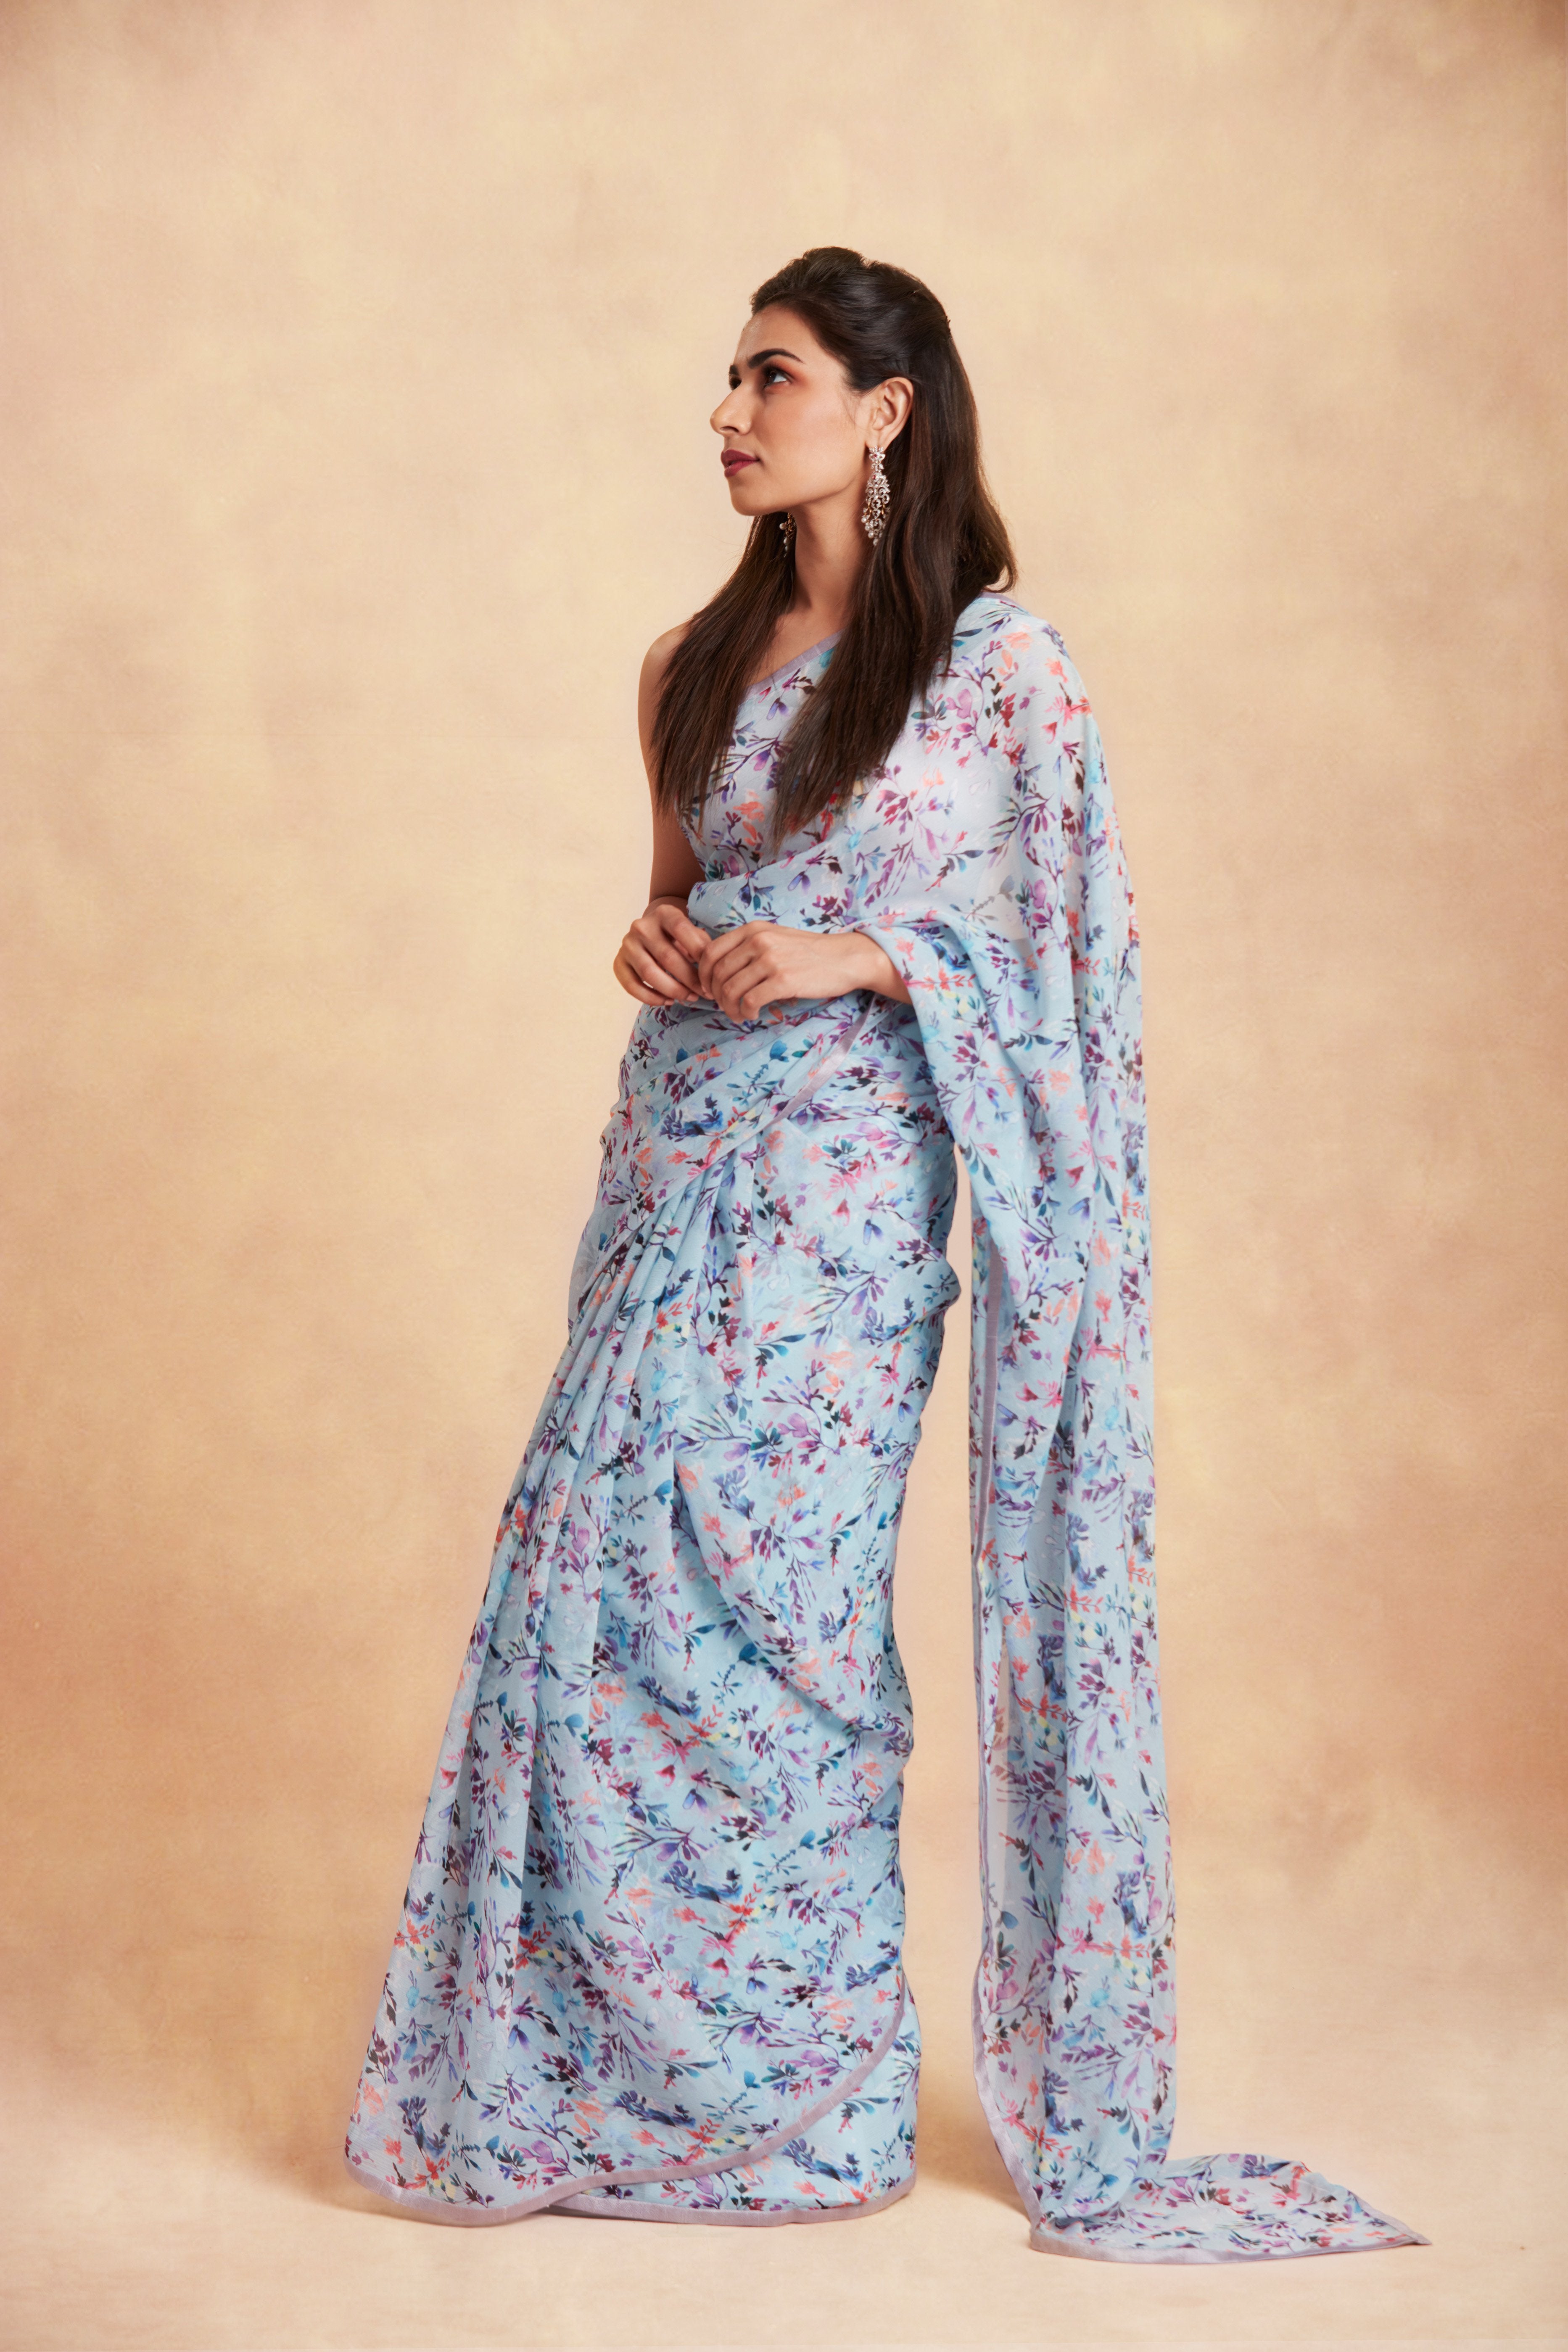 Sanjhana Reddy - Blue floral print saree